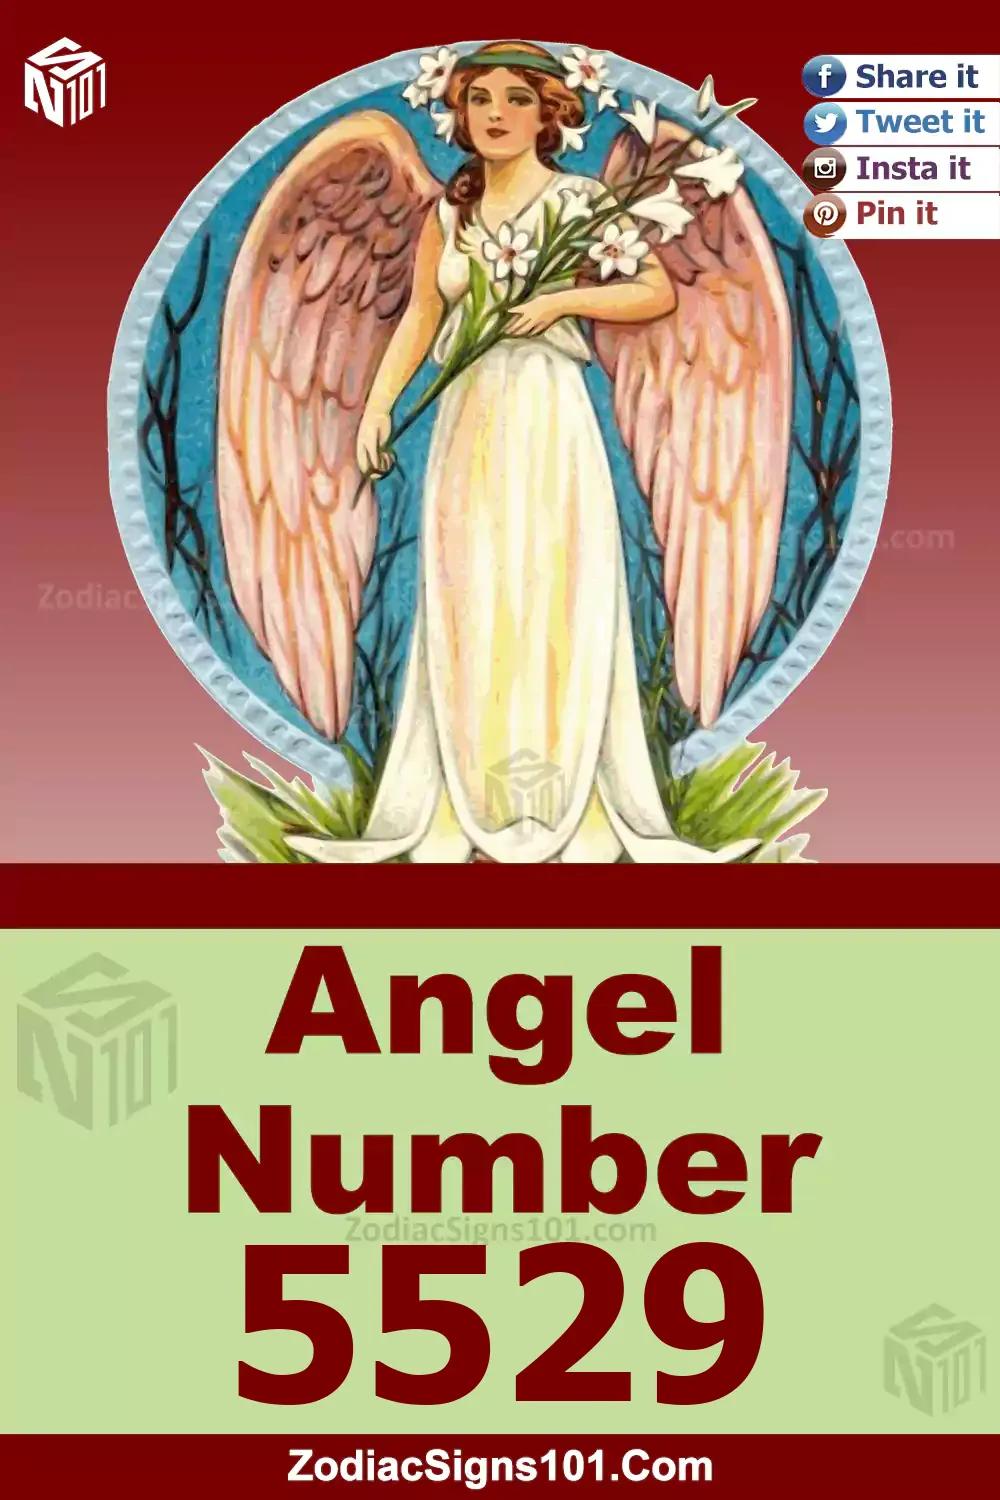 5529-Angel-Number-Meaning.jpg